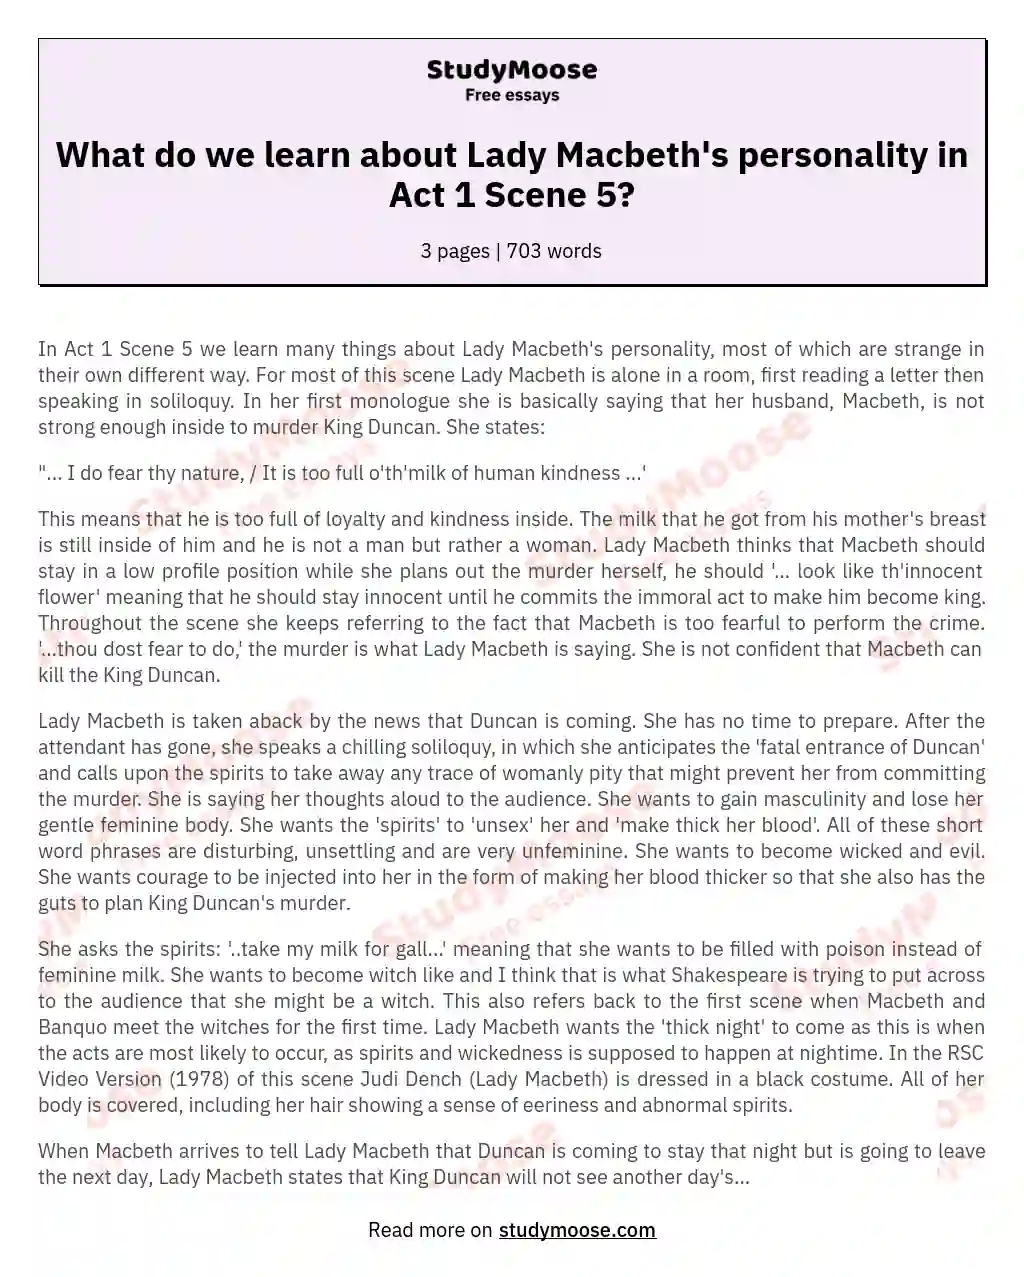 lady macbeth essay act 1 scene 5